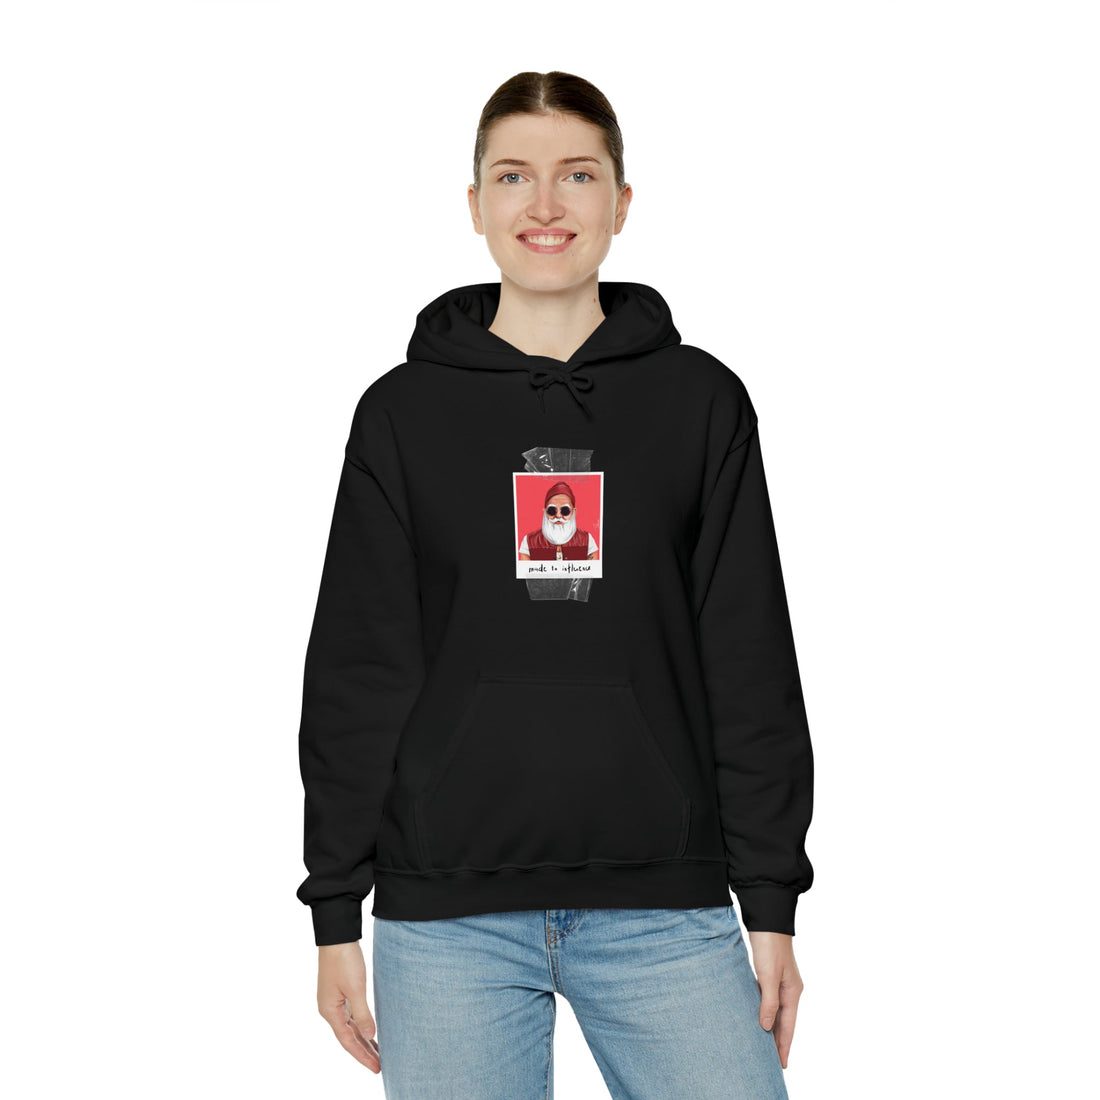 Santa Claus Hipstory Hooded Sweatshirt - Hipstory Shop